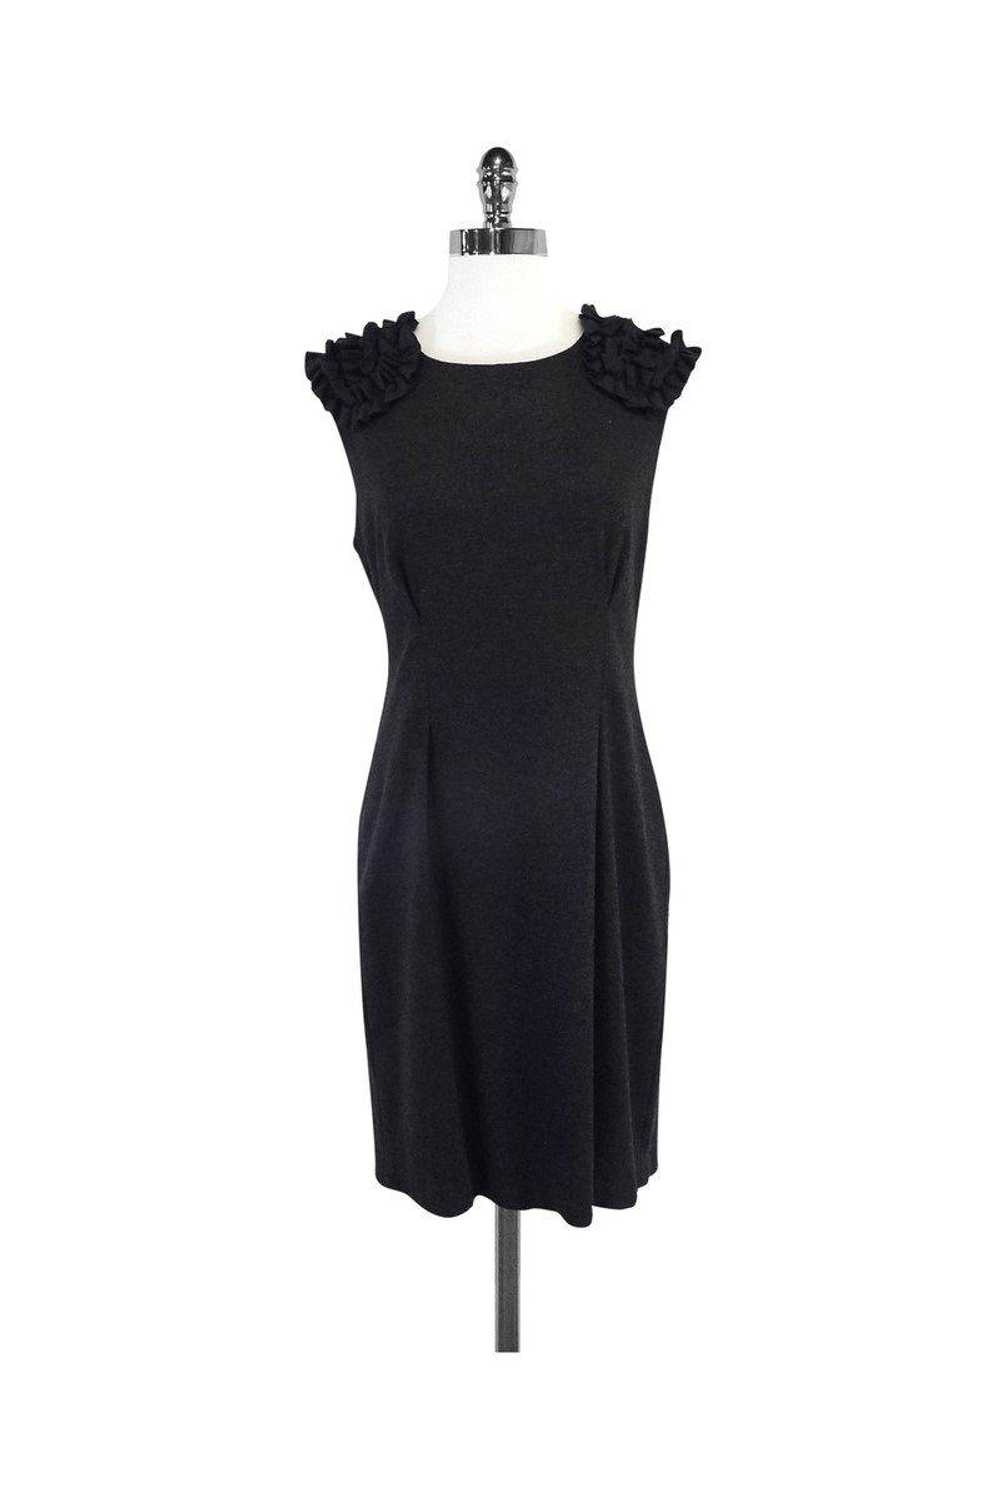 Trina Turk - Charcoal Grey Ruffle Shoulder Dress … - image 1